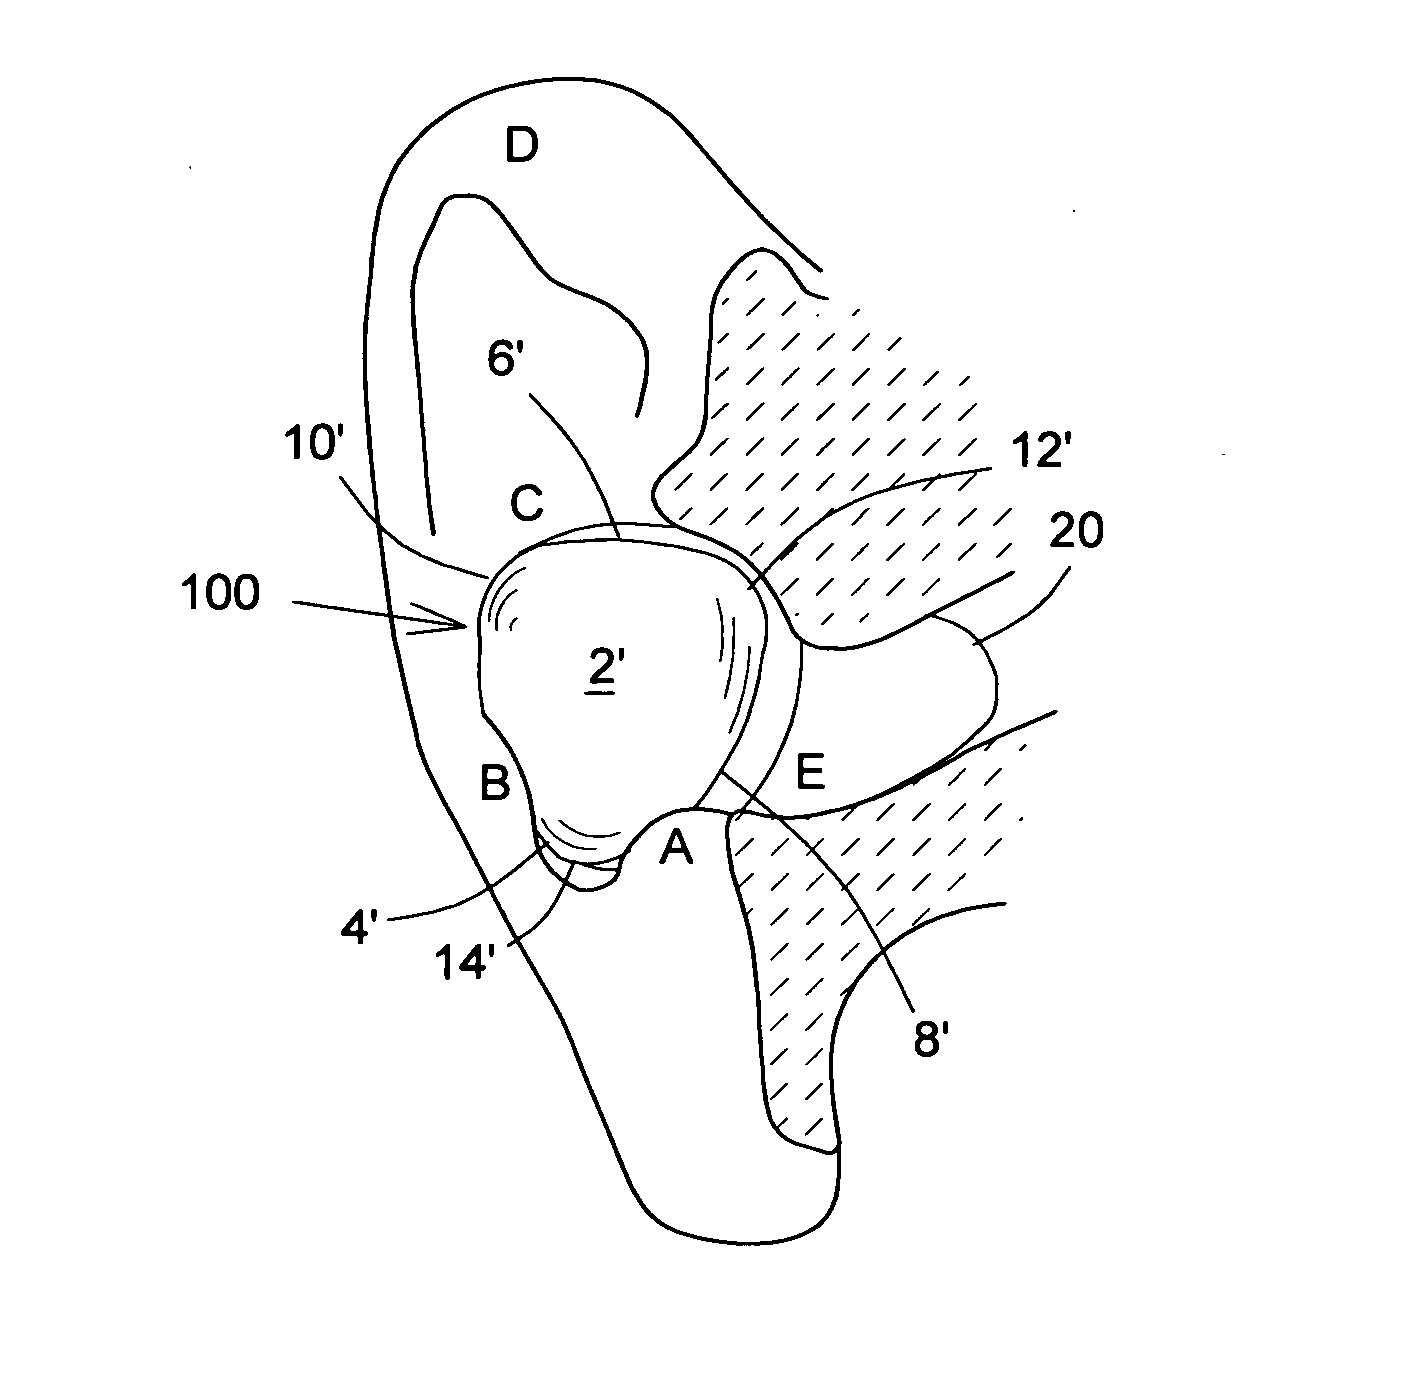 Quasi-triangular in-ear device